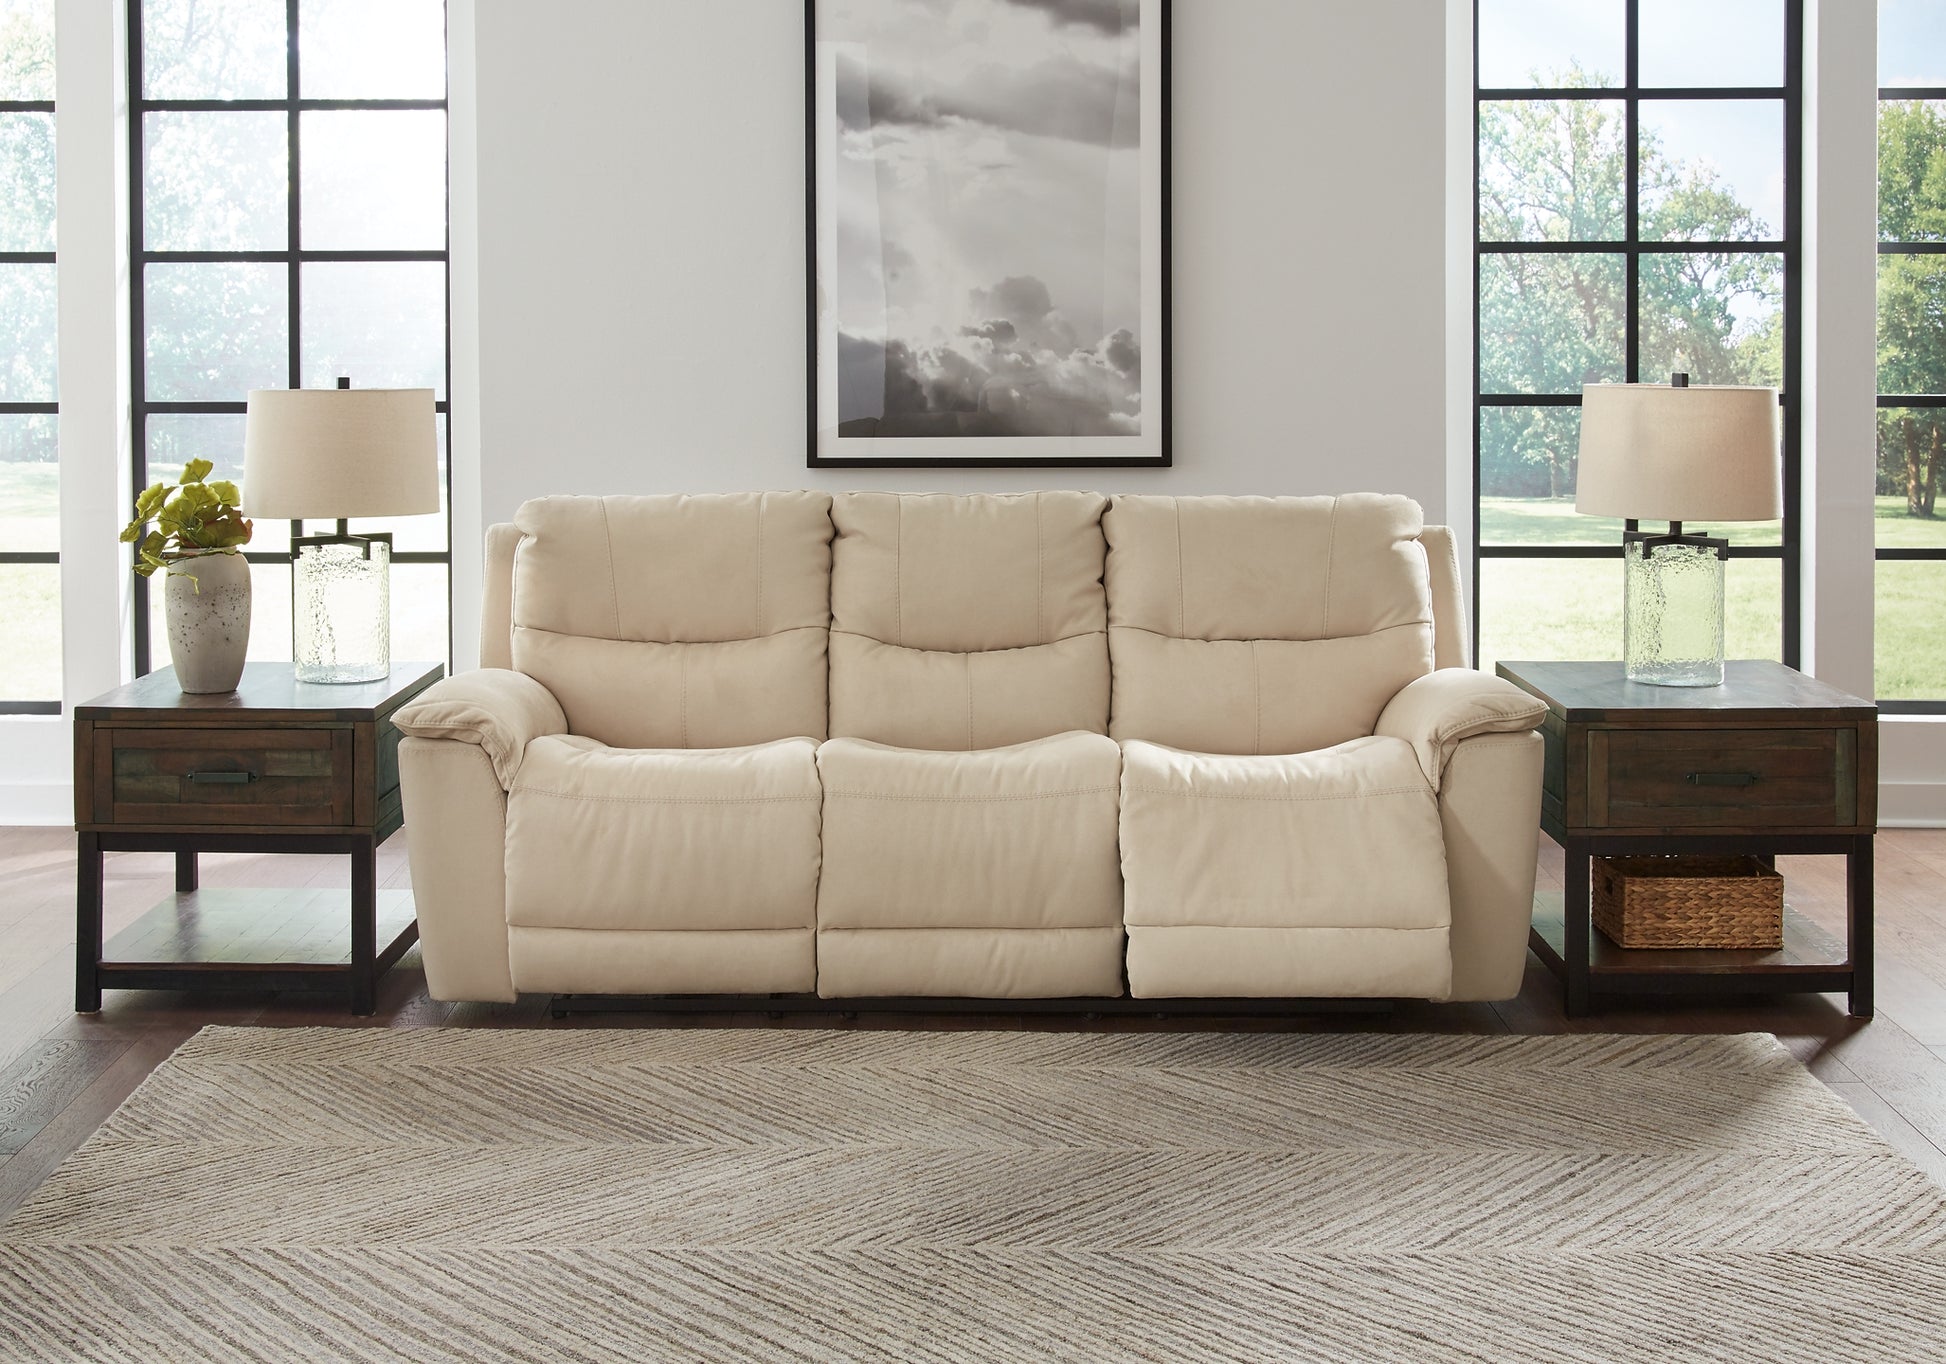 Next-Gen Gaucho PWR REC Sofa with ADJ Headrest JB's Furniture Furniture, Bedroom, Accessories